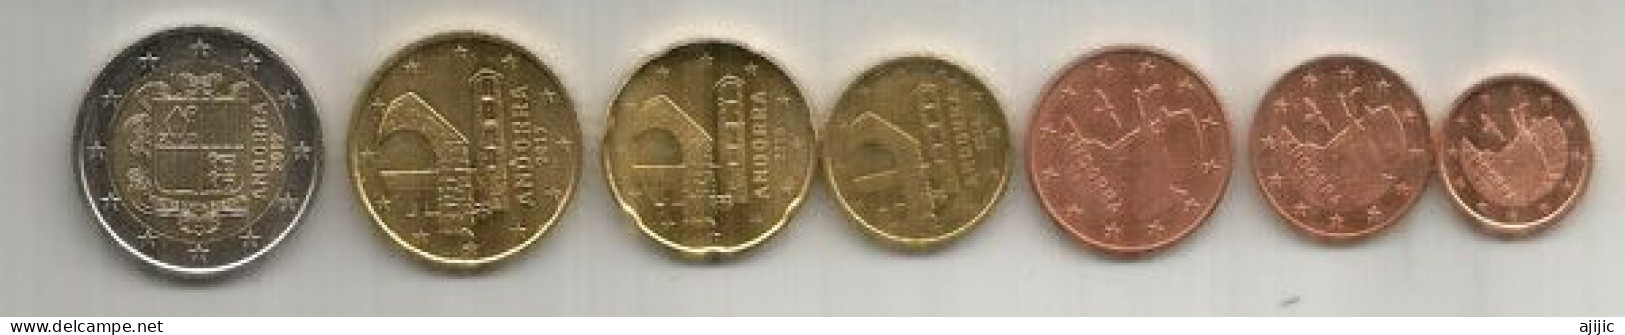 Principality Of Andorra Euro Coins.  (7) - Andorra